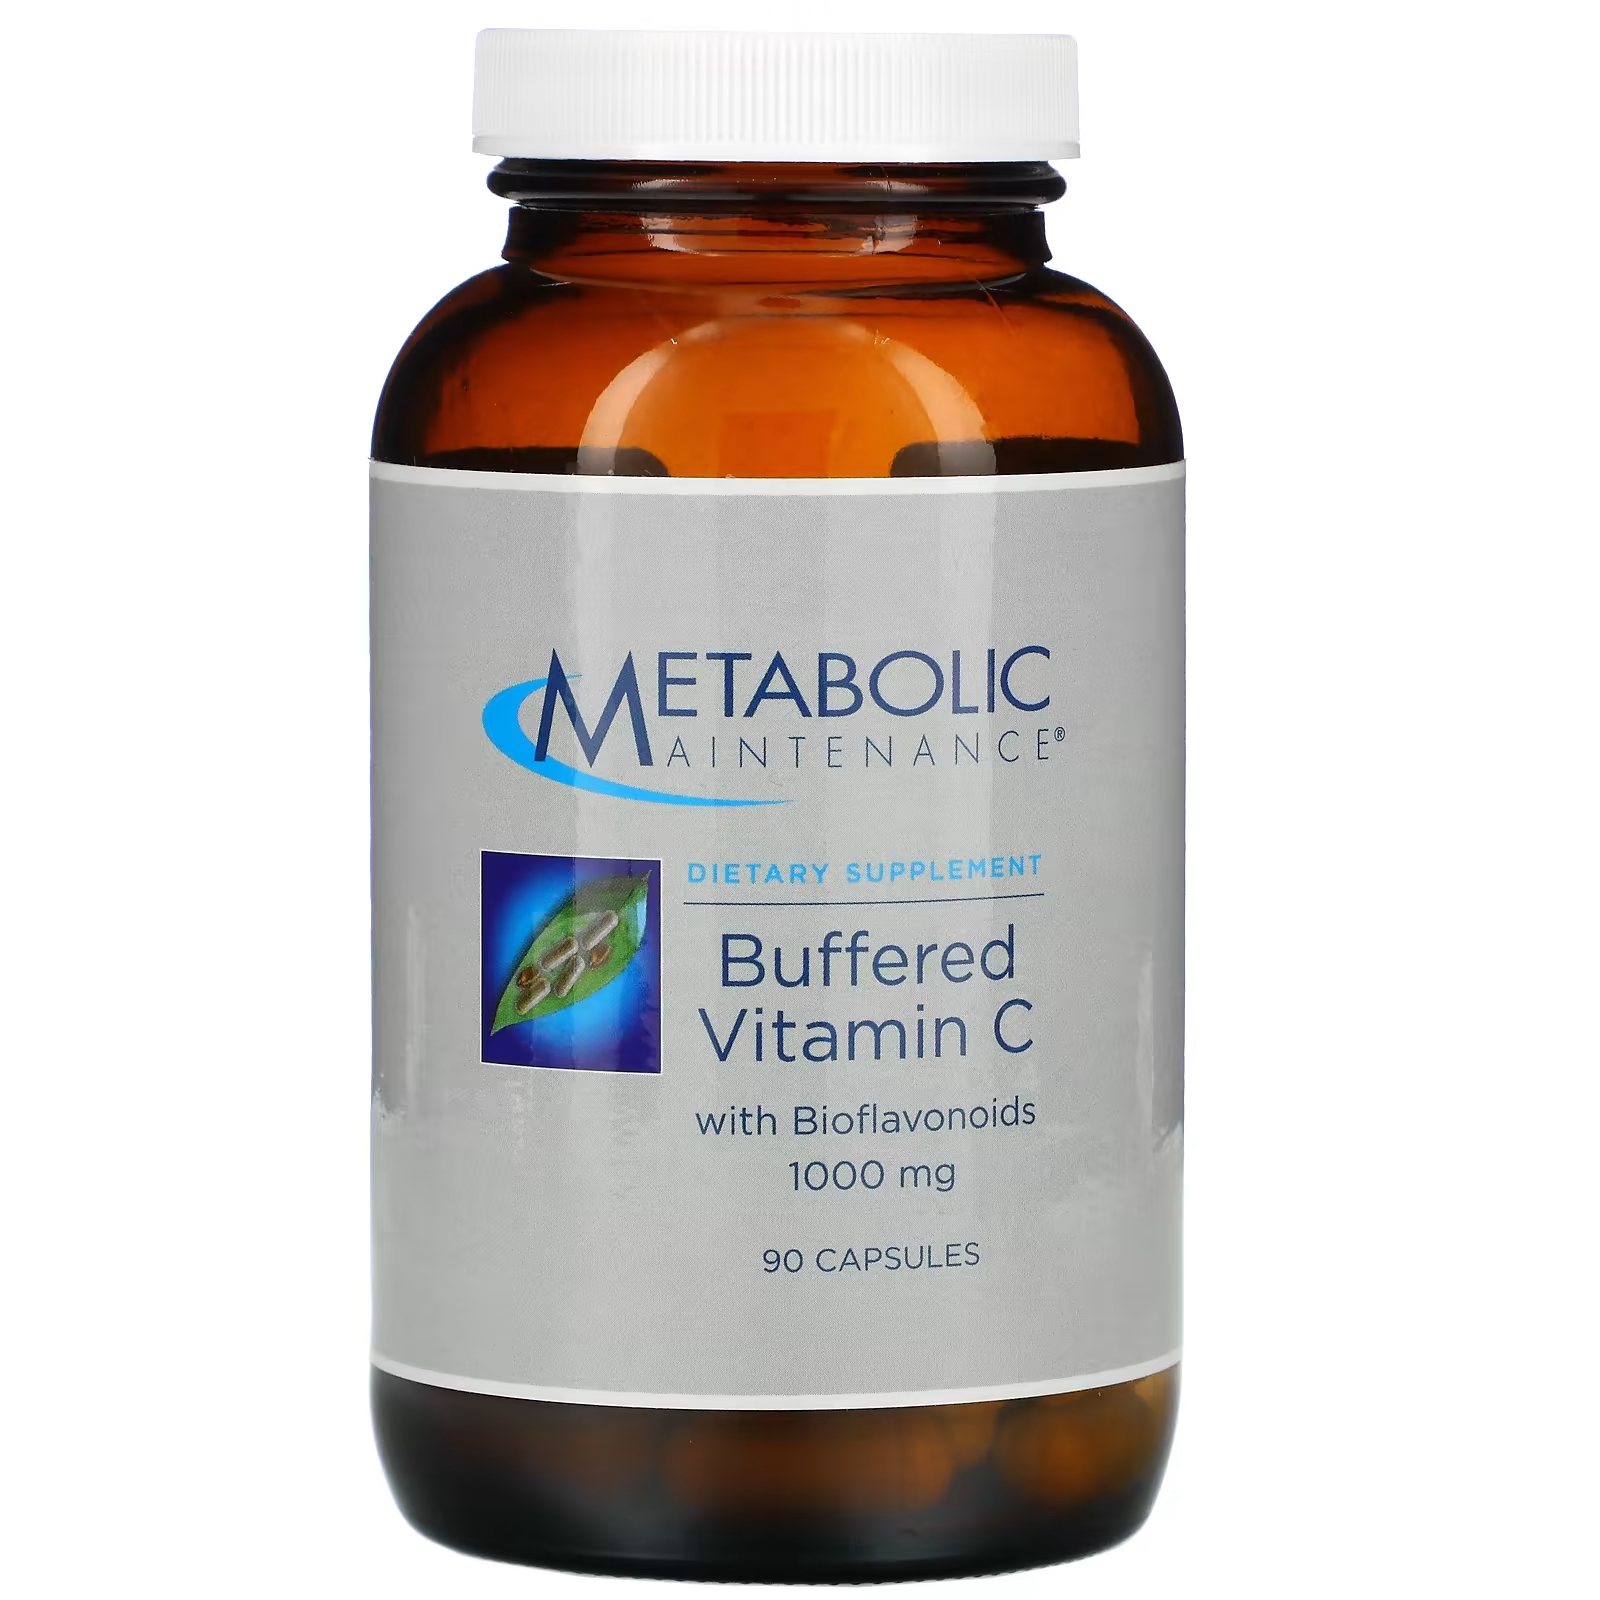 Буферизованный Витамин C Metabolic Maintenance с биофлавоноидами, 90 капсул витамин с metabolic nutrition 1500 мг 90 капсул